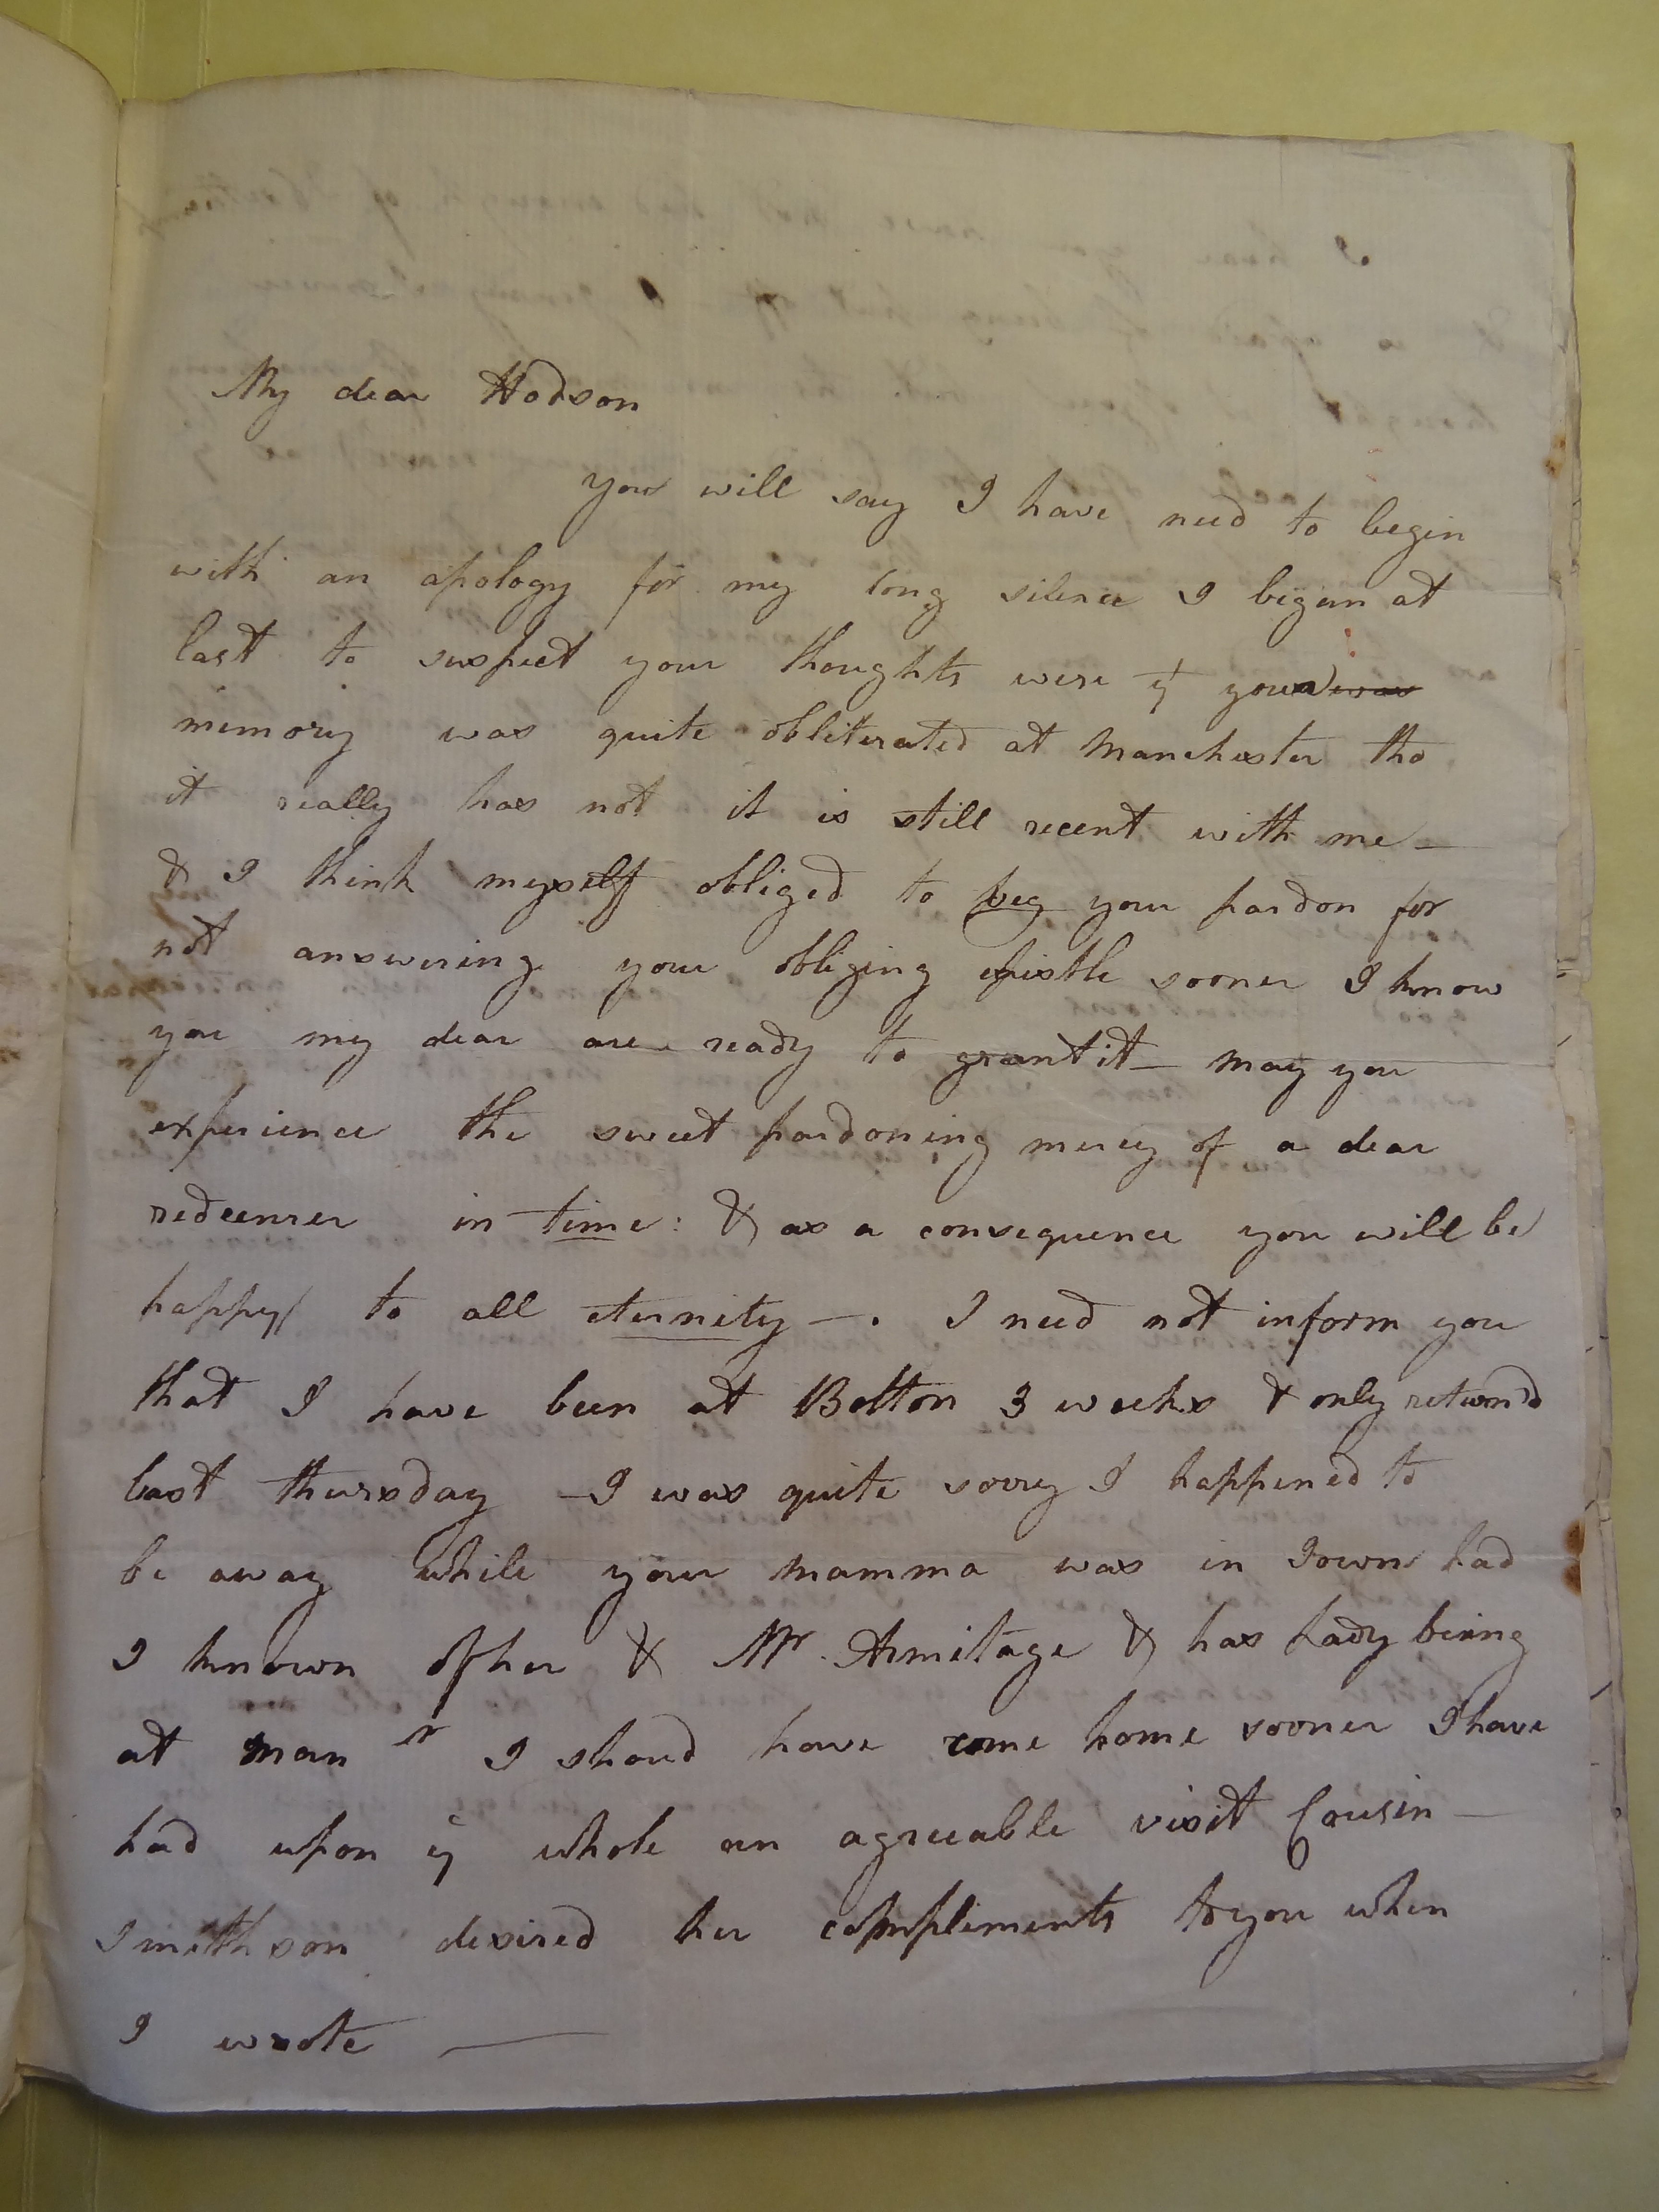 Image #1 of letter: Rebekah Bateman to Mary Jane Hodson, 26 August 1783